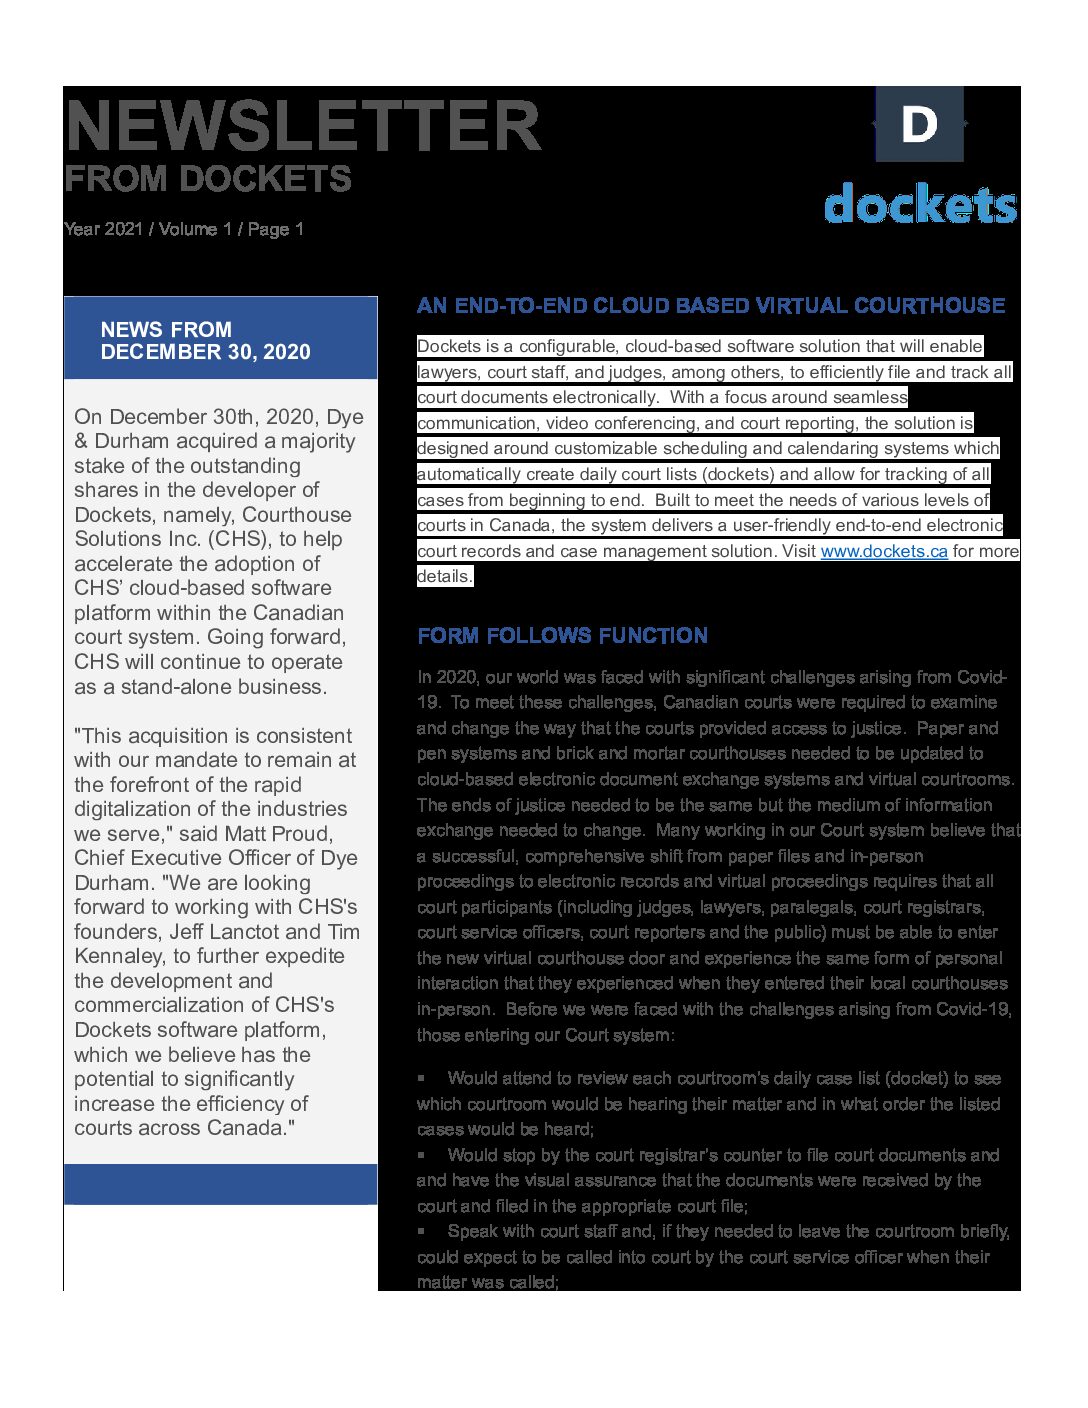 Dockets – Newsletter 2021 Issue 1